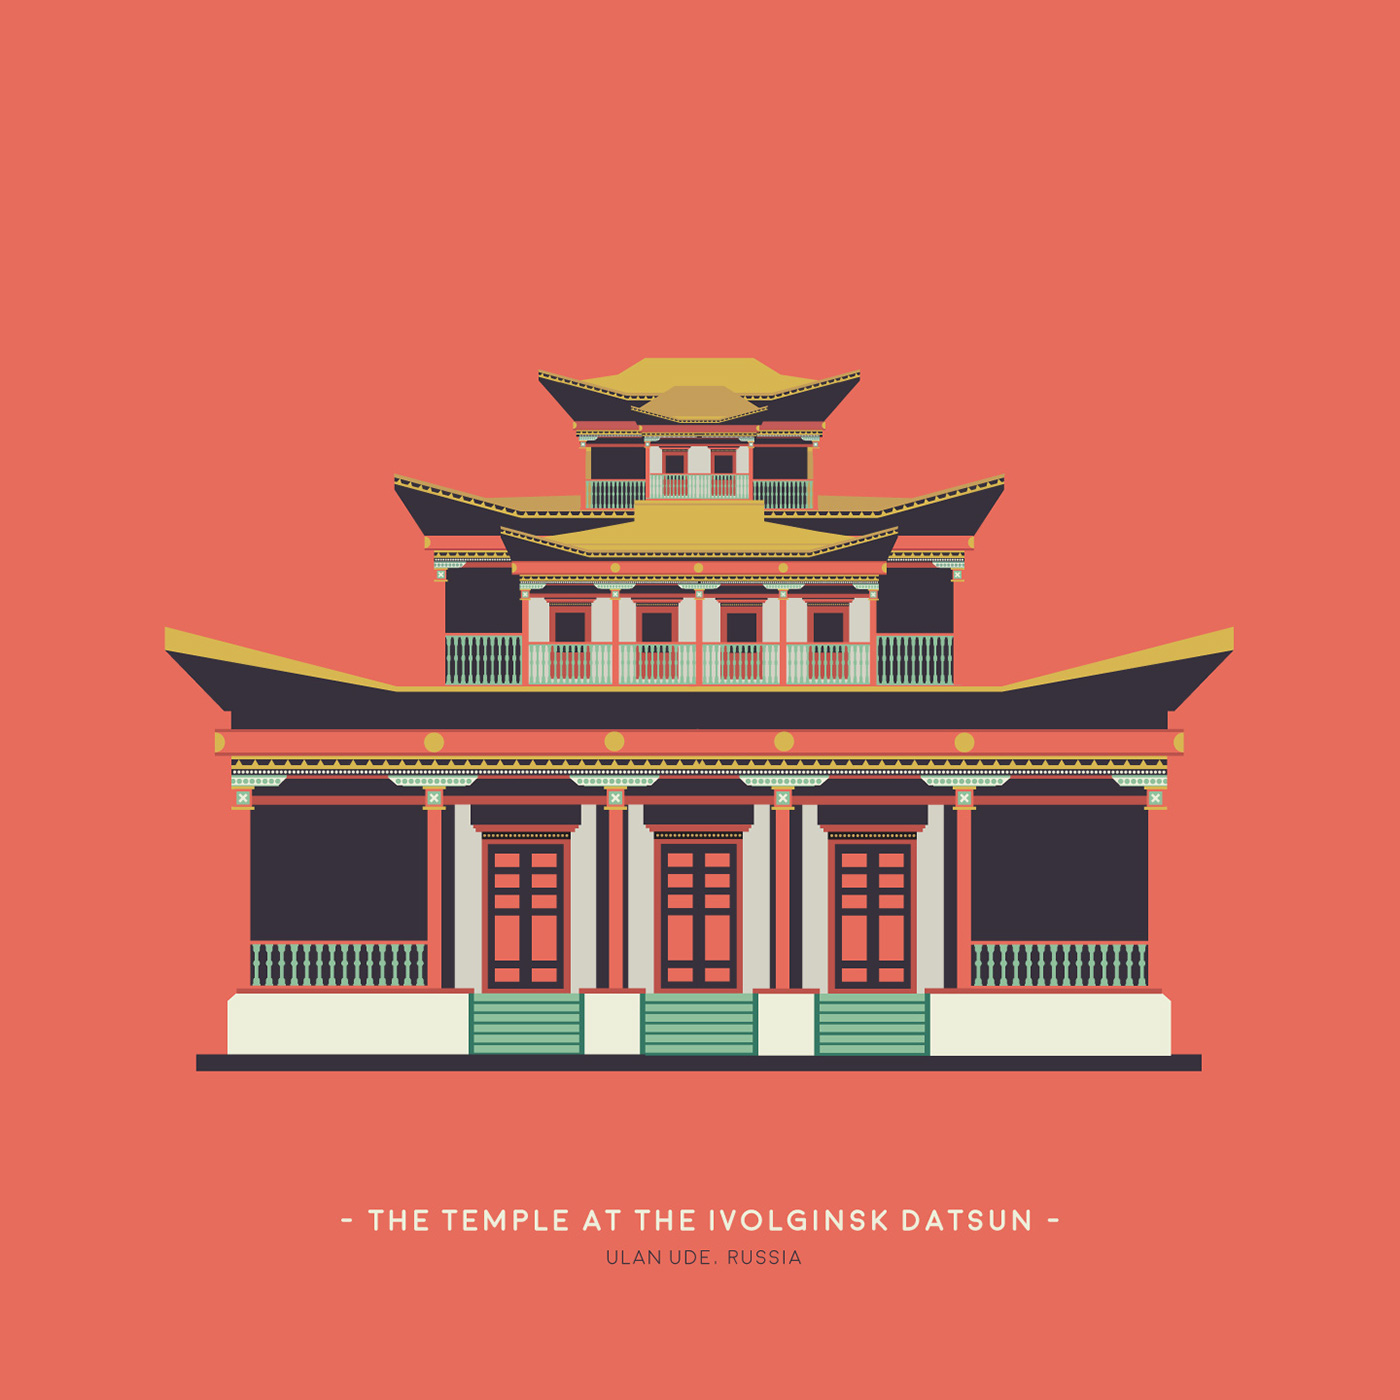 #illustrations #buildings building-illustration #Japanese landmarks #fushimi Inari Shrine graphic design 